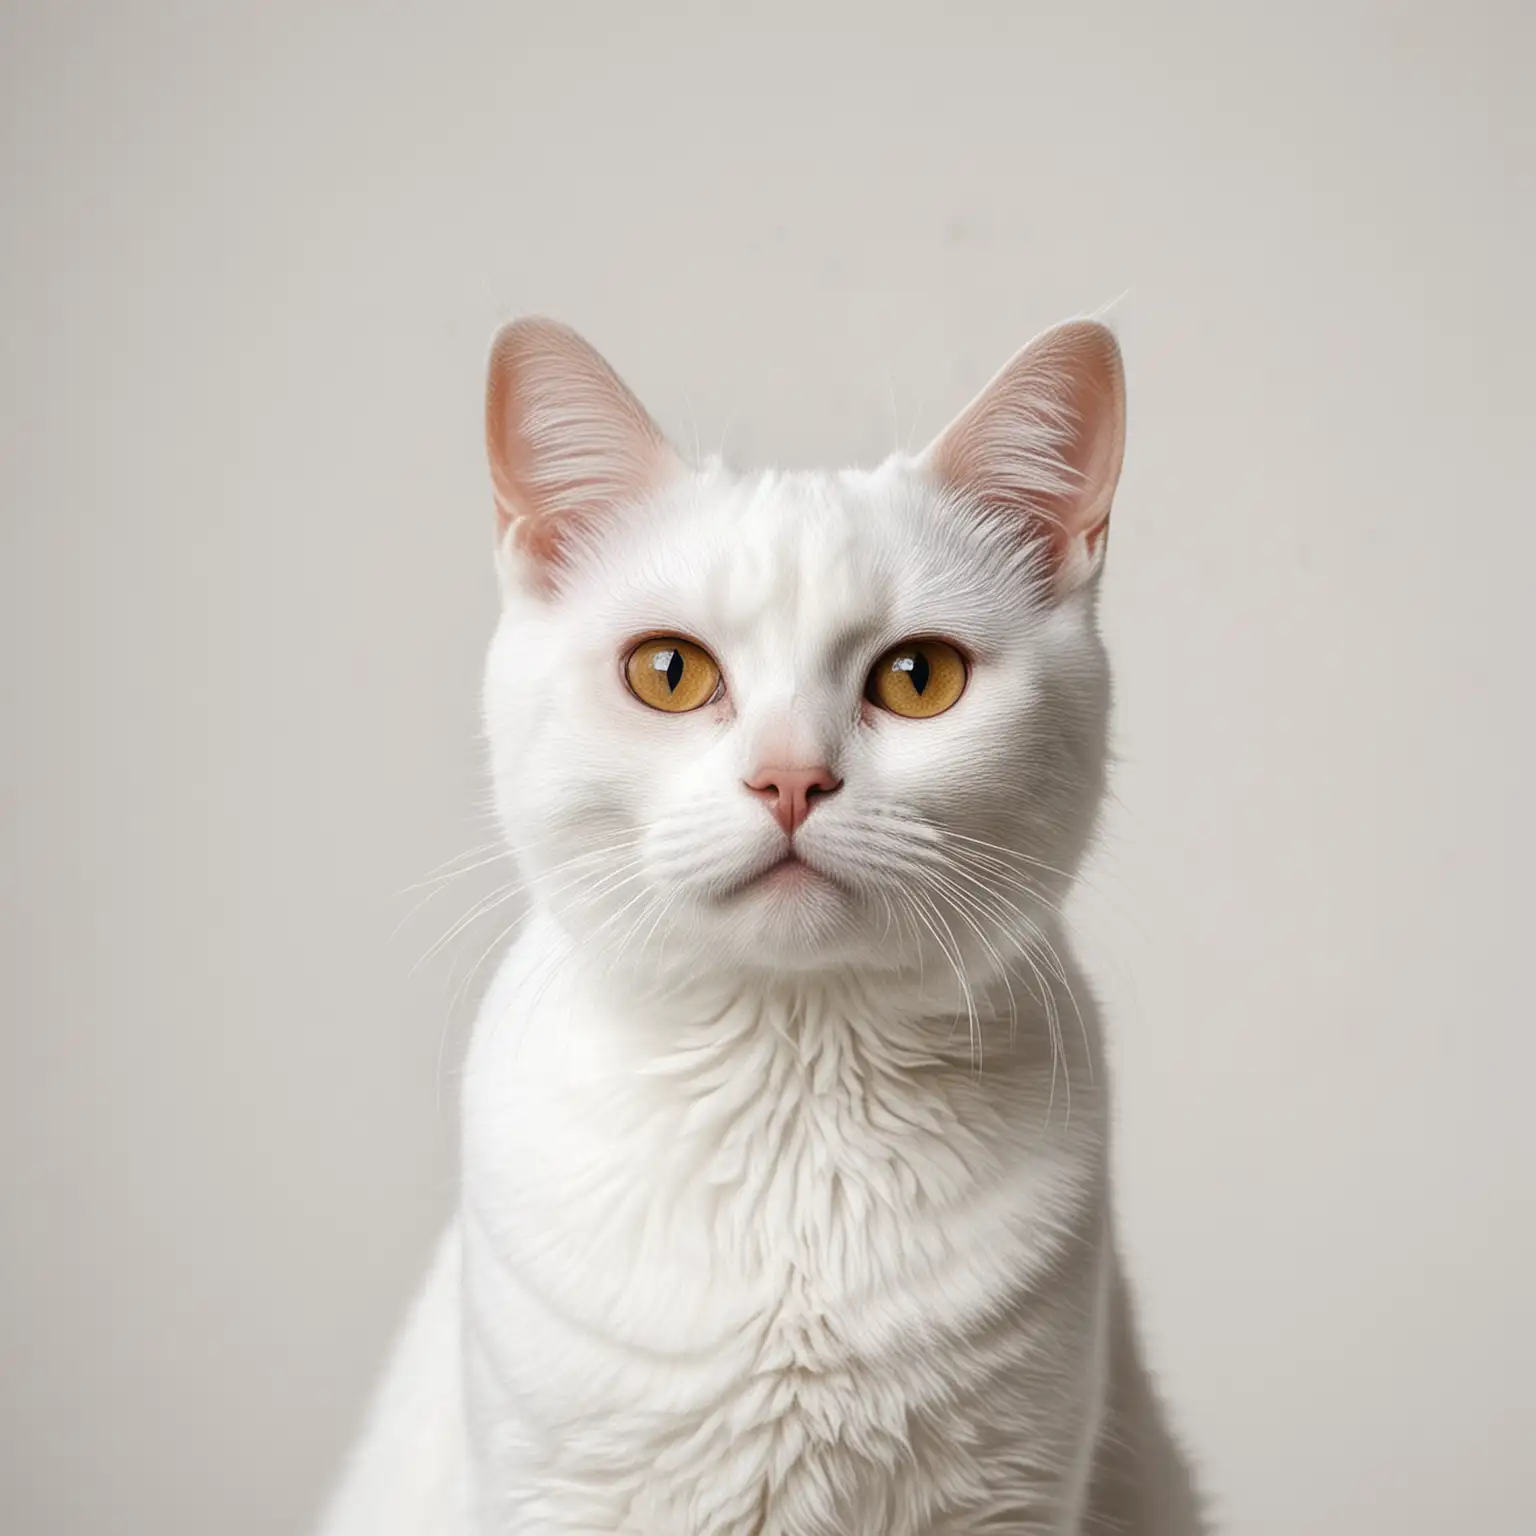 Cat Sitting on White Background